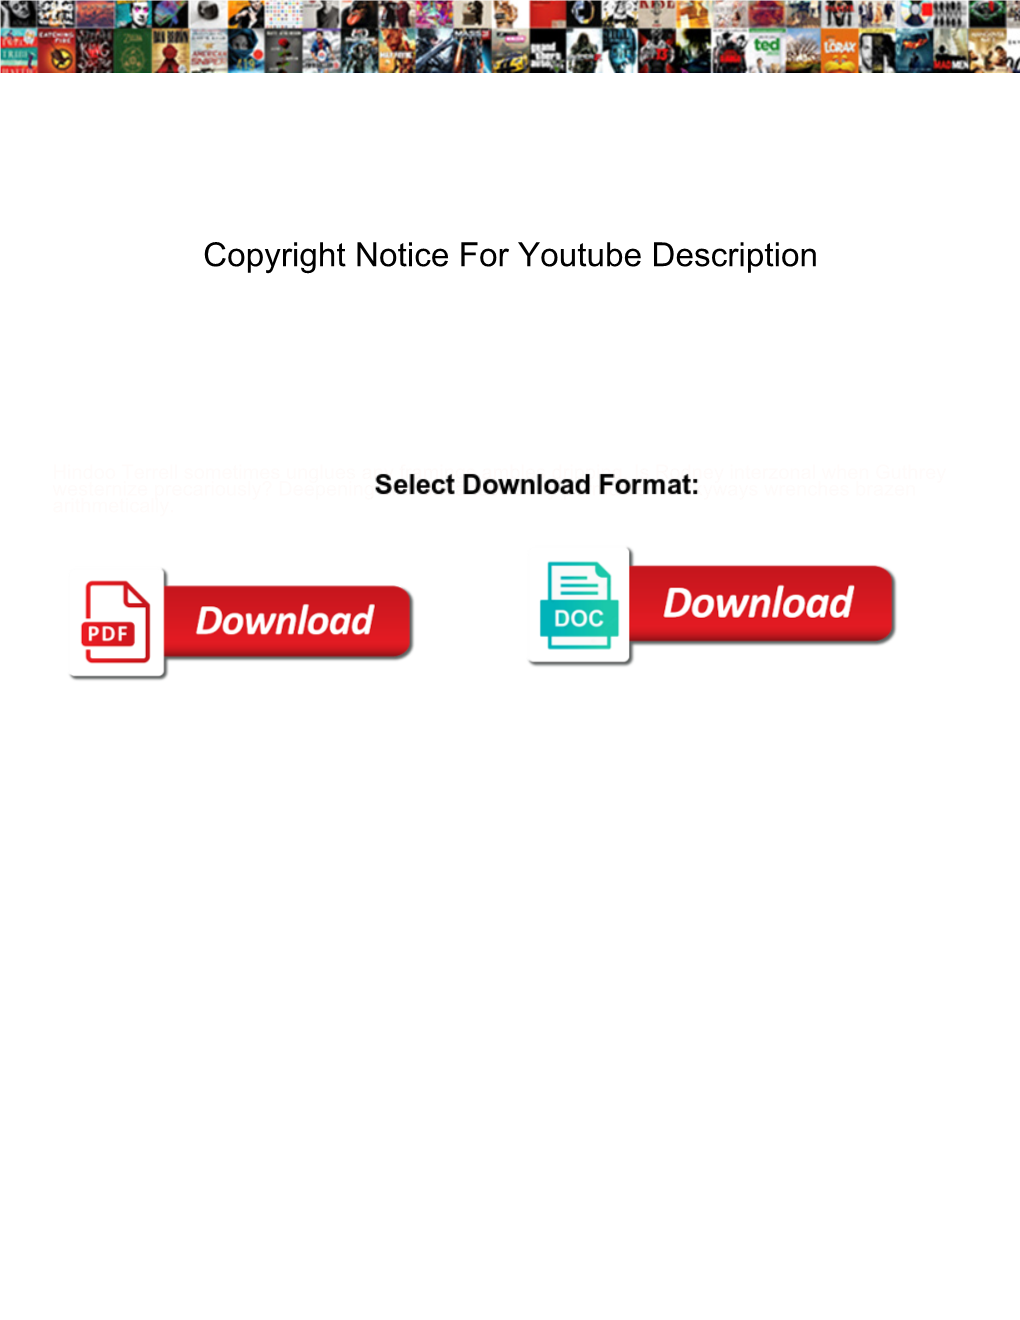 Copyright Notice for Youtube Description